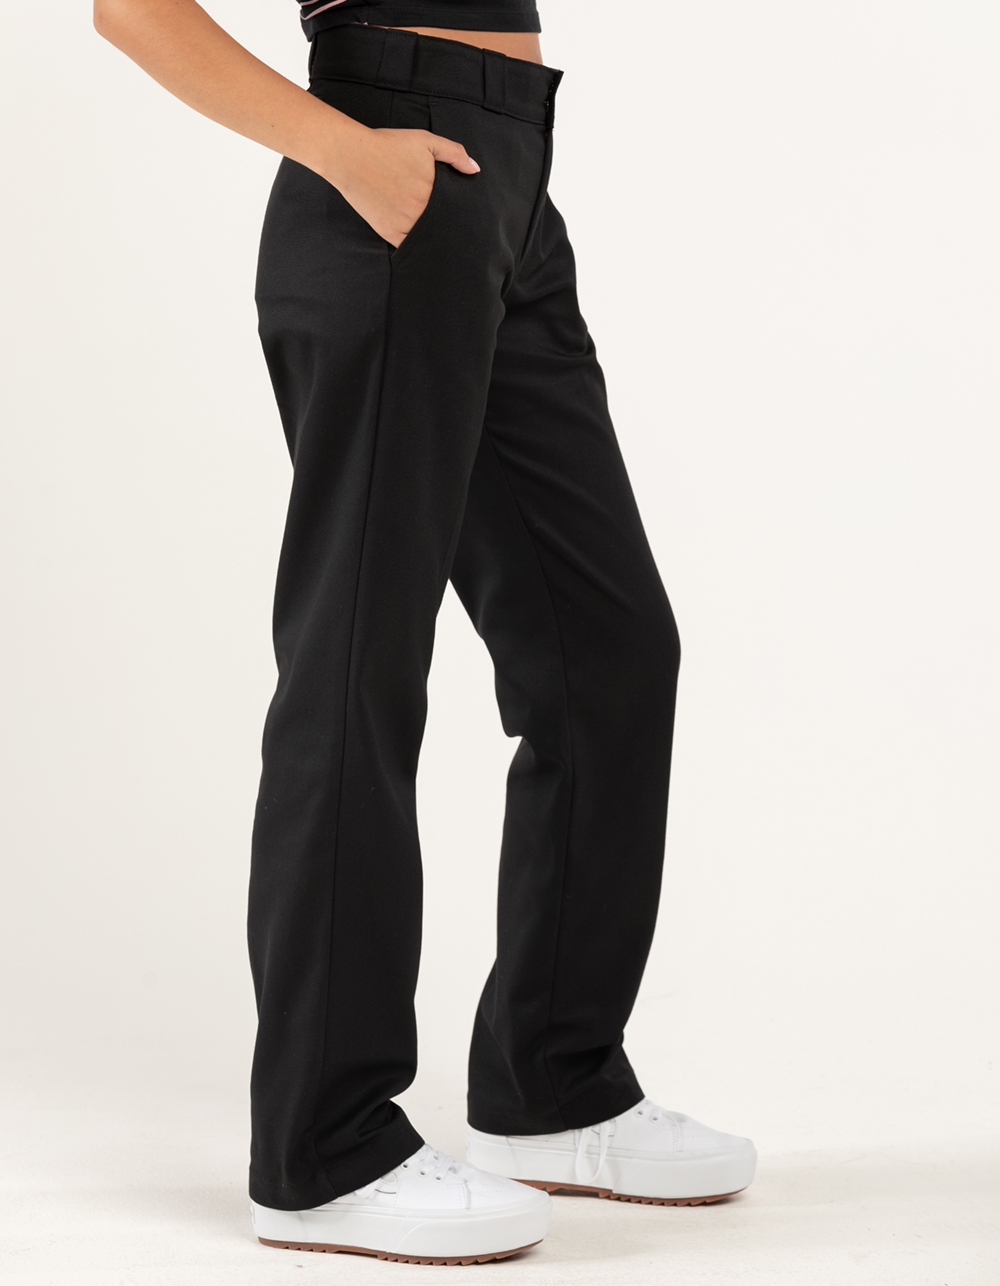 KOSIWU Work Pants for Women, Black, Small : : Clothing